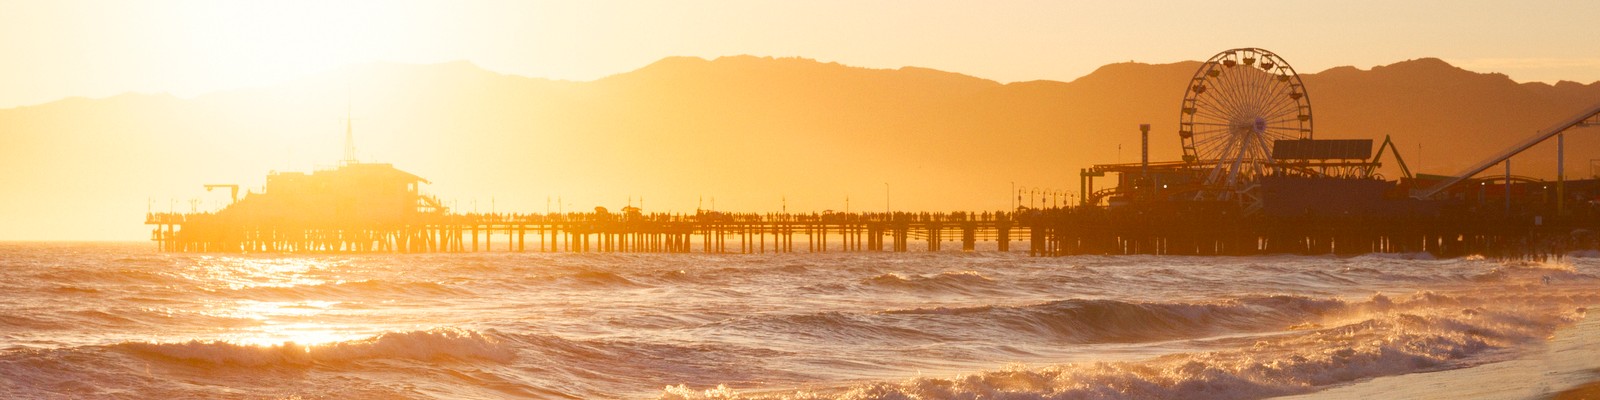 View of the famous coastline along Santa Monica near UCLA